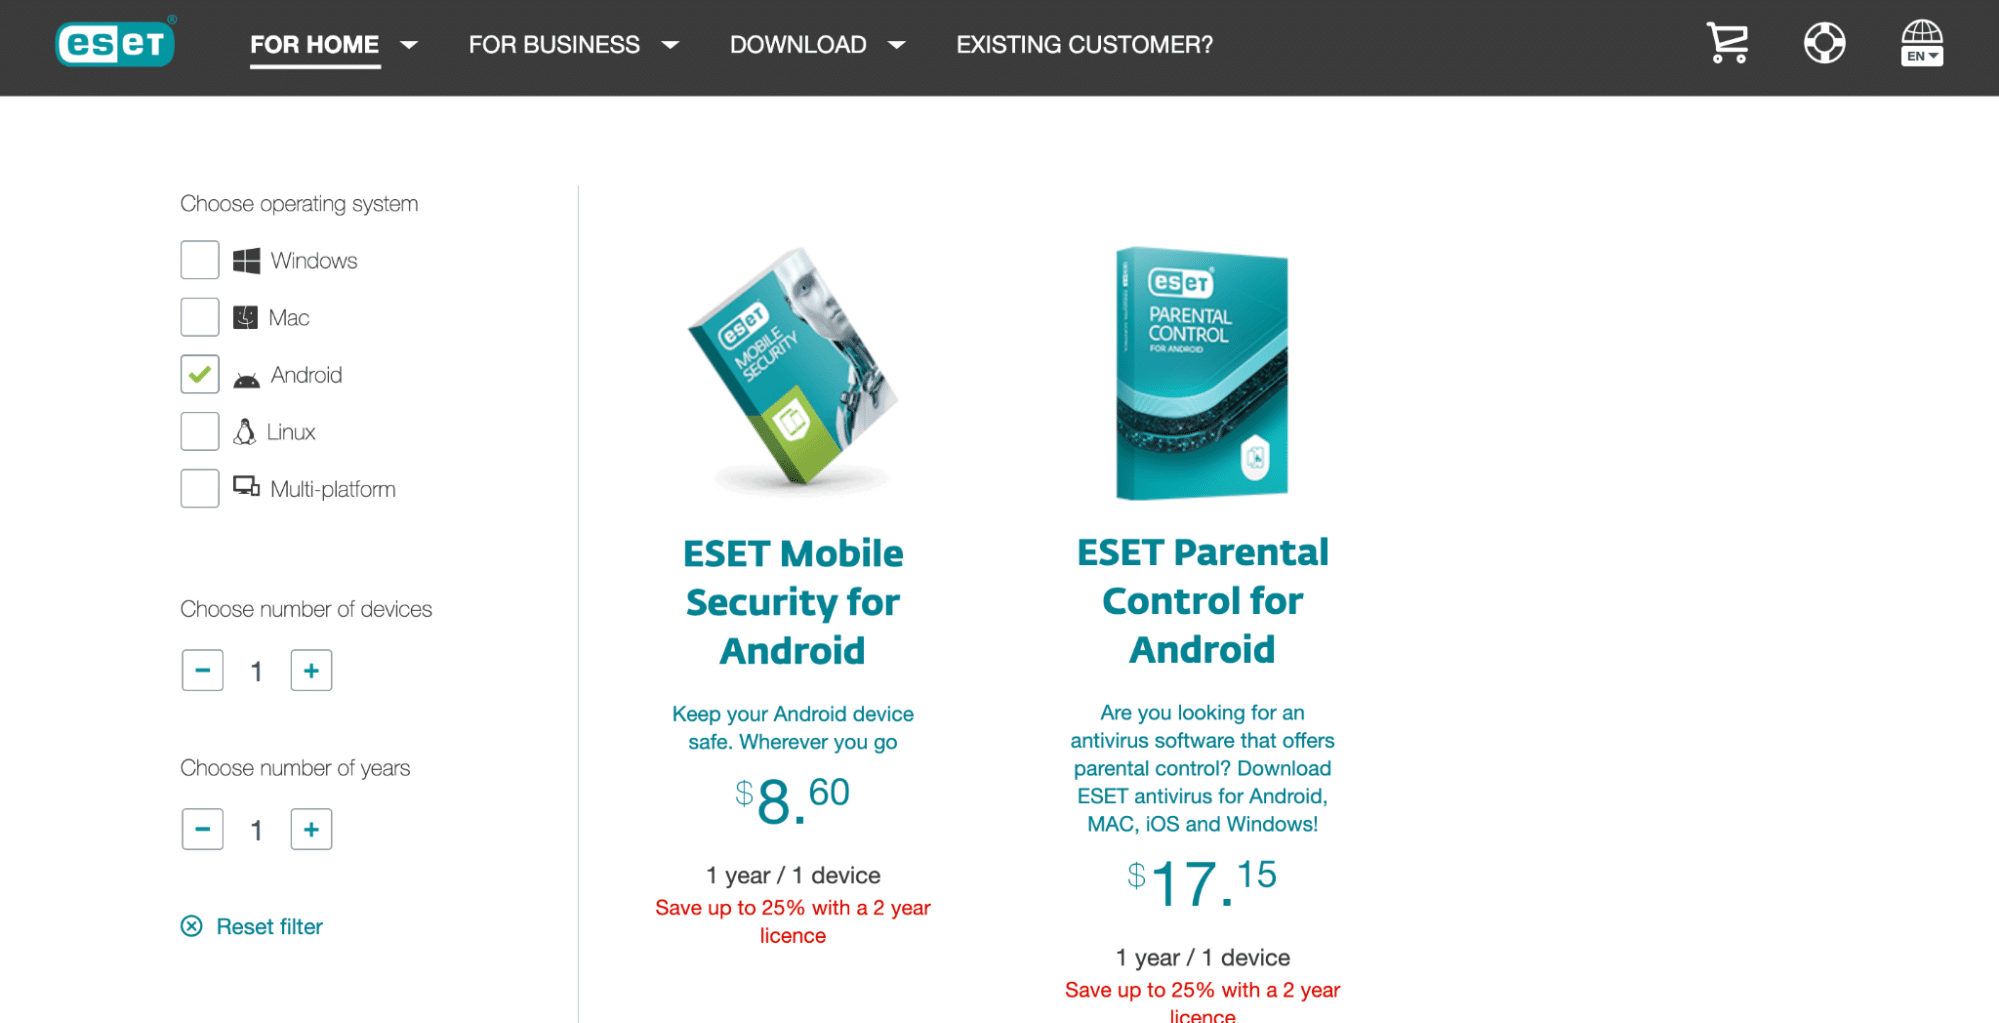 ESET pricing information